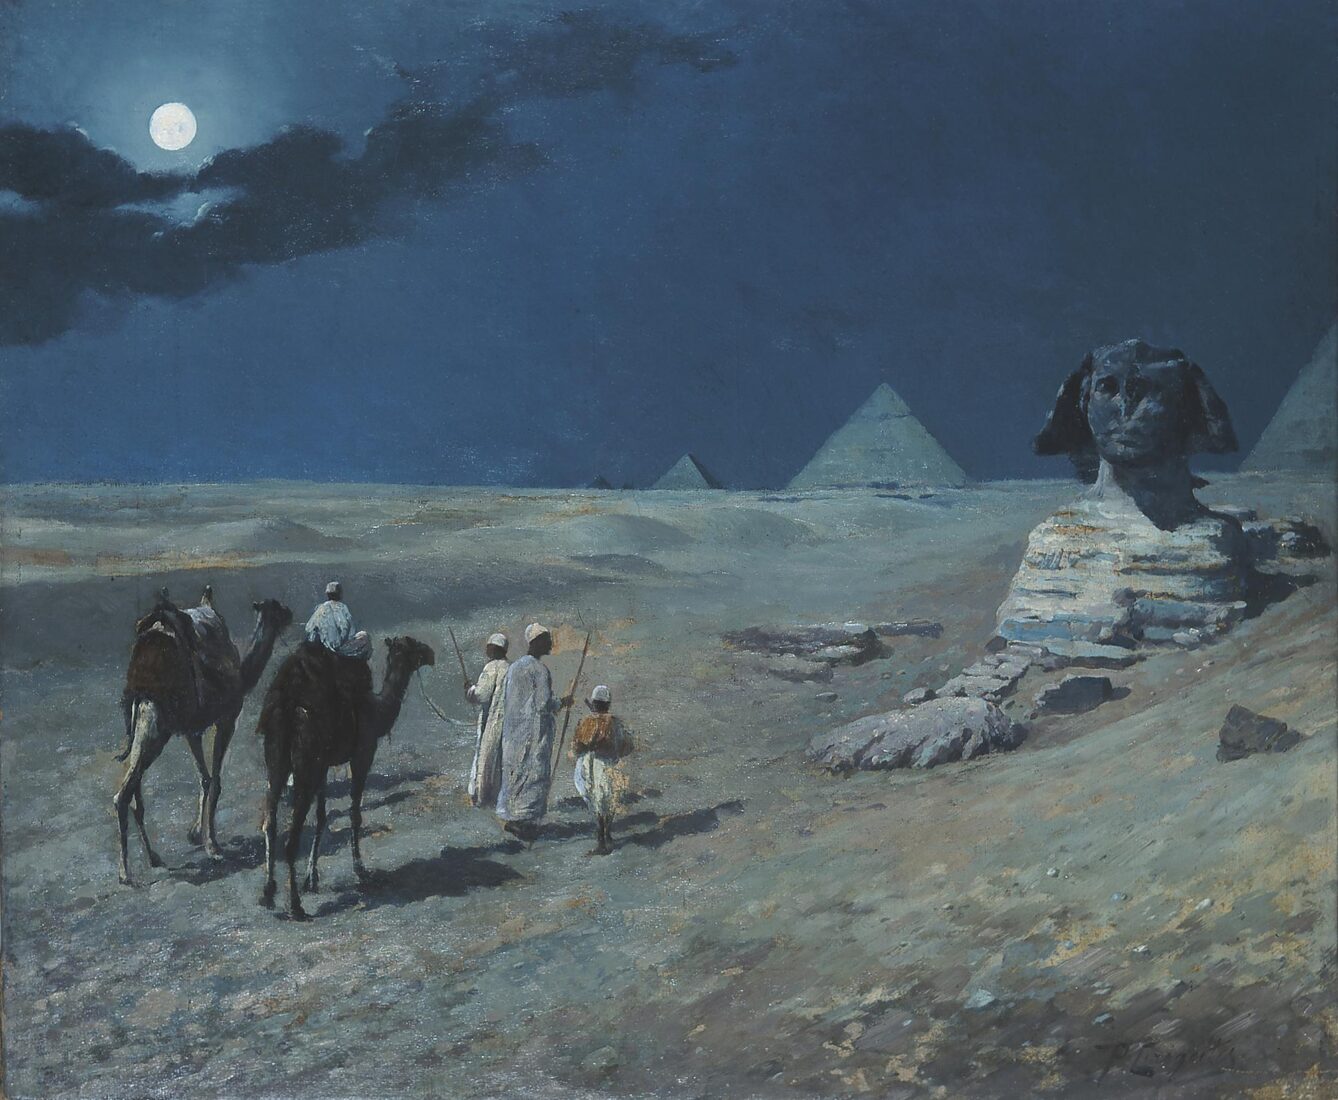 The Sphinx in Cairo